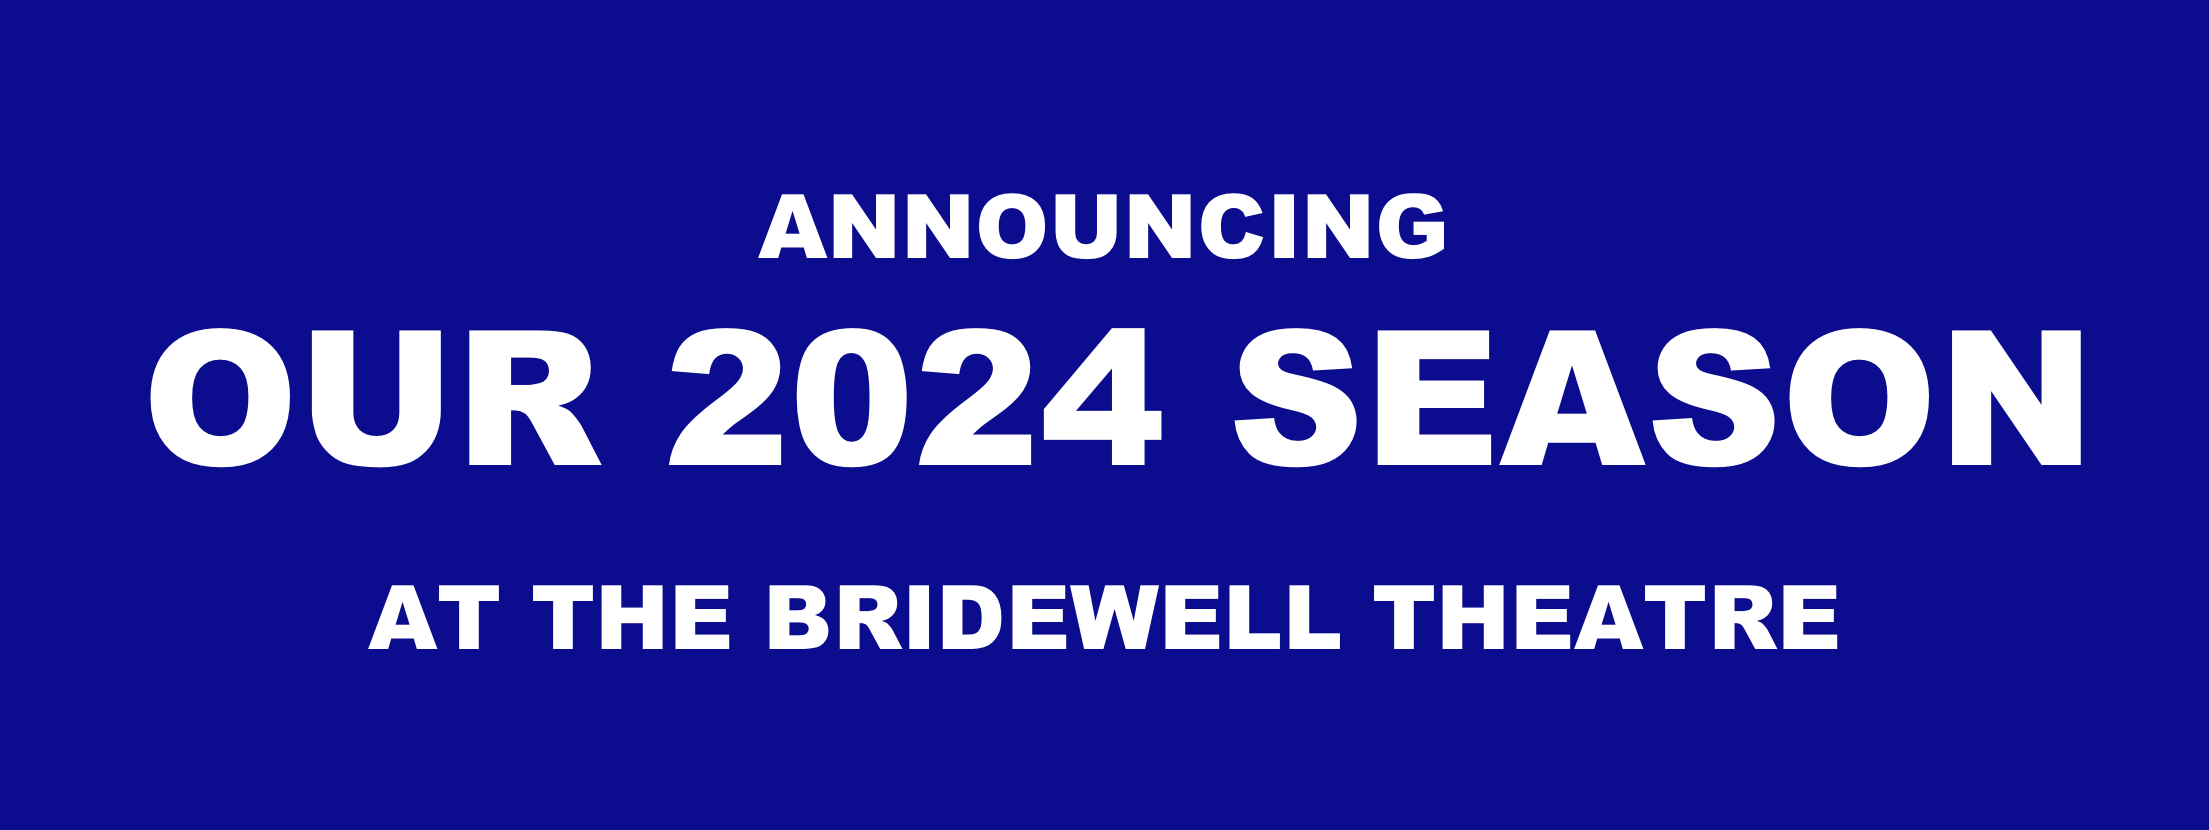 Sedos 2024 Bridewell season